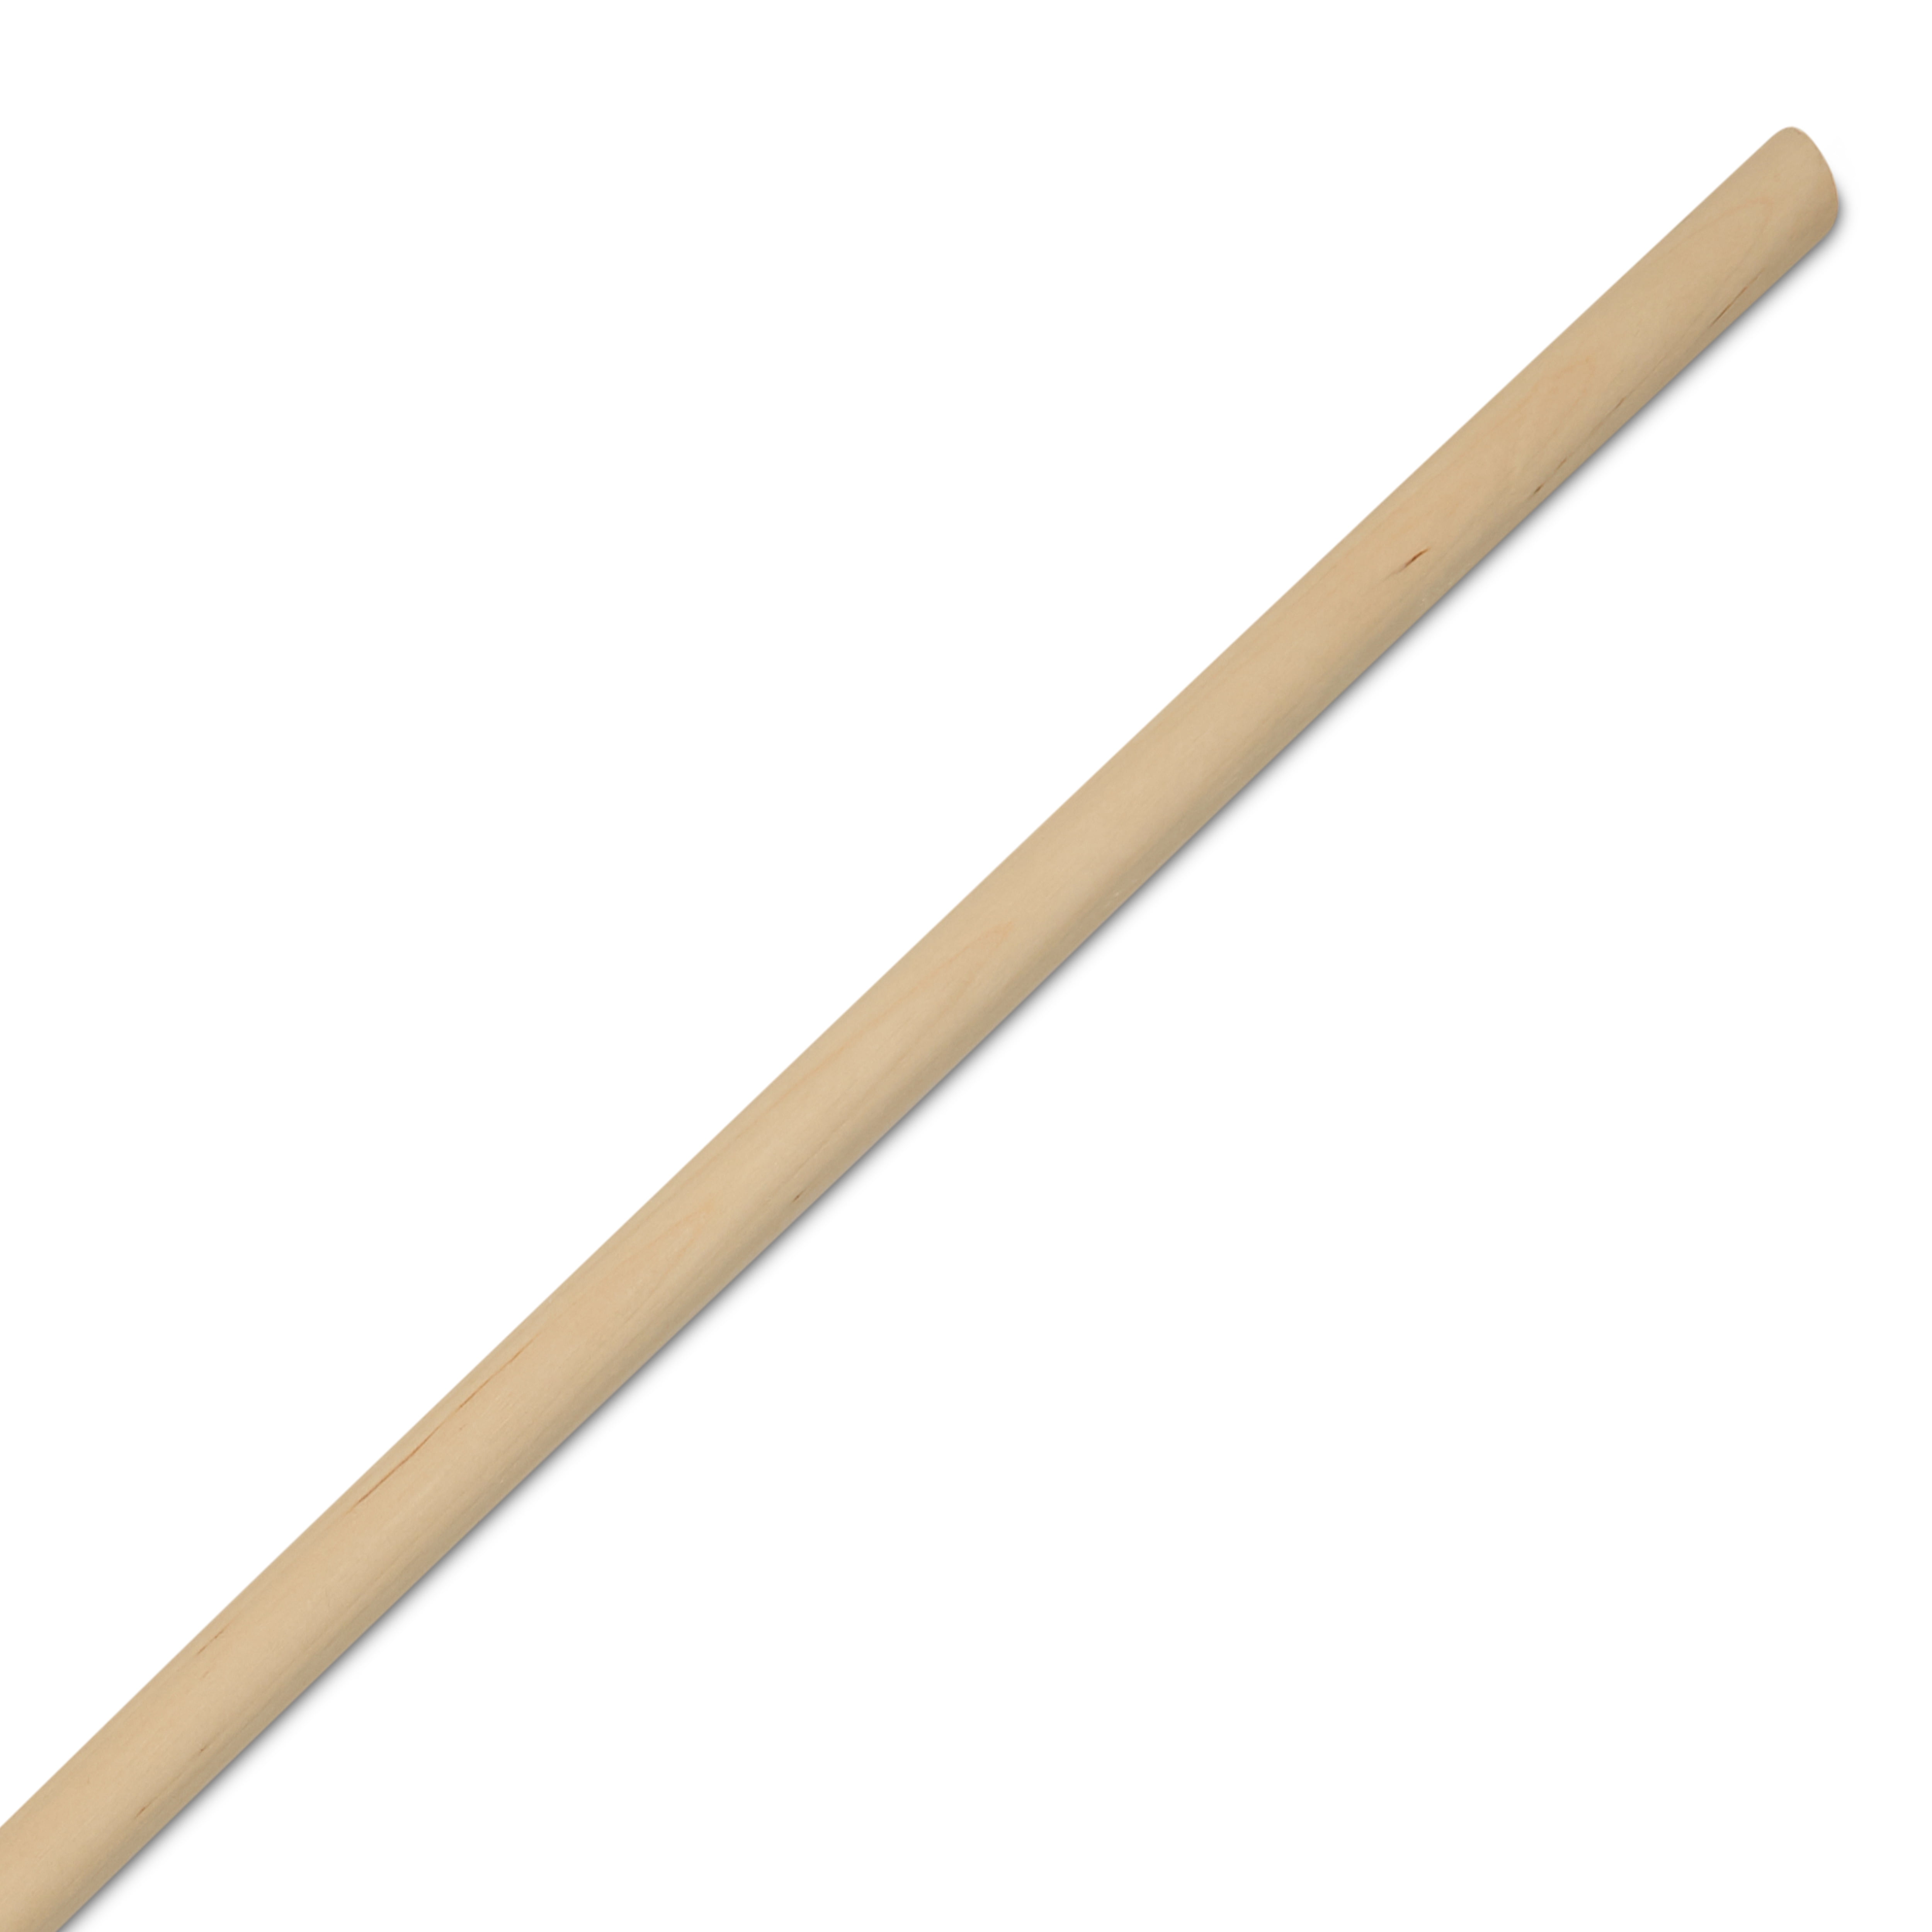 Dowel Rods Wood Sticks Wooden Dowel Rods - 1/2 x 12 Inch